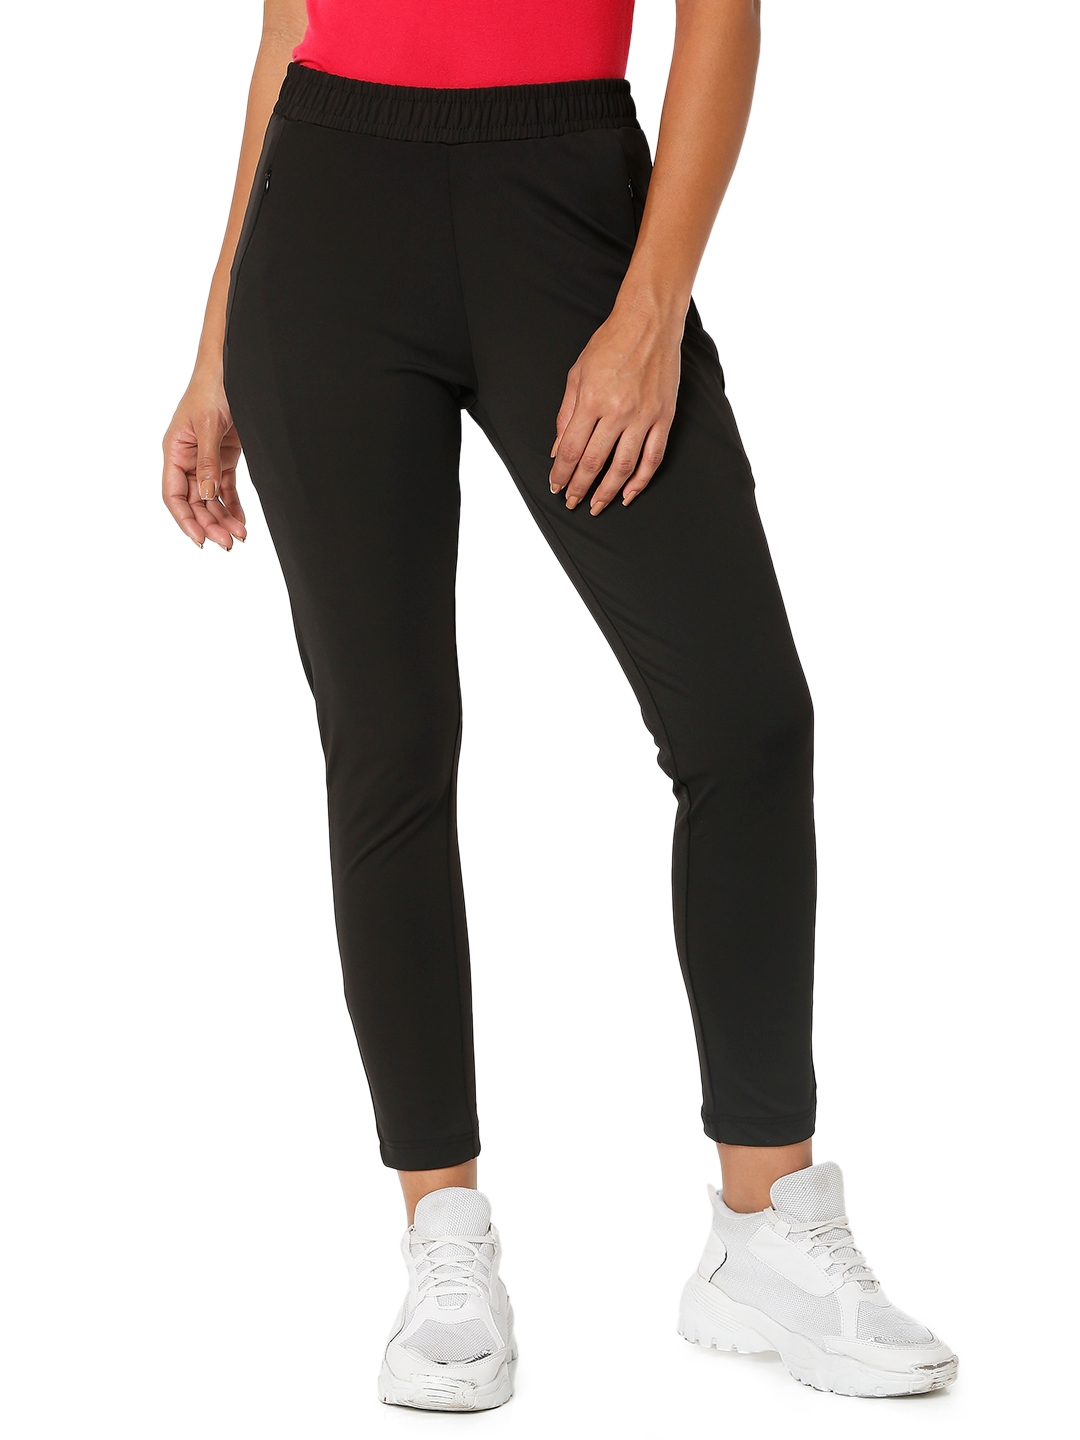 Smarty Pants women's cotton lycra ankle length blooming black color trouser